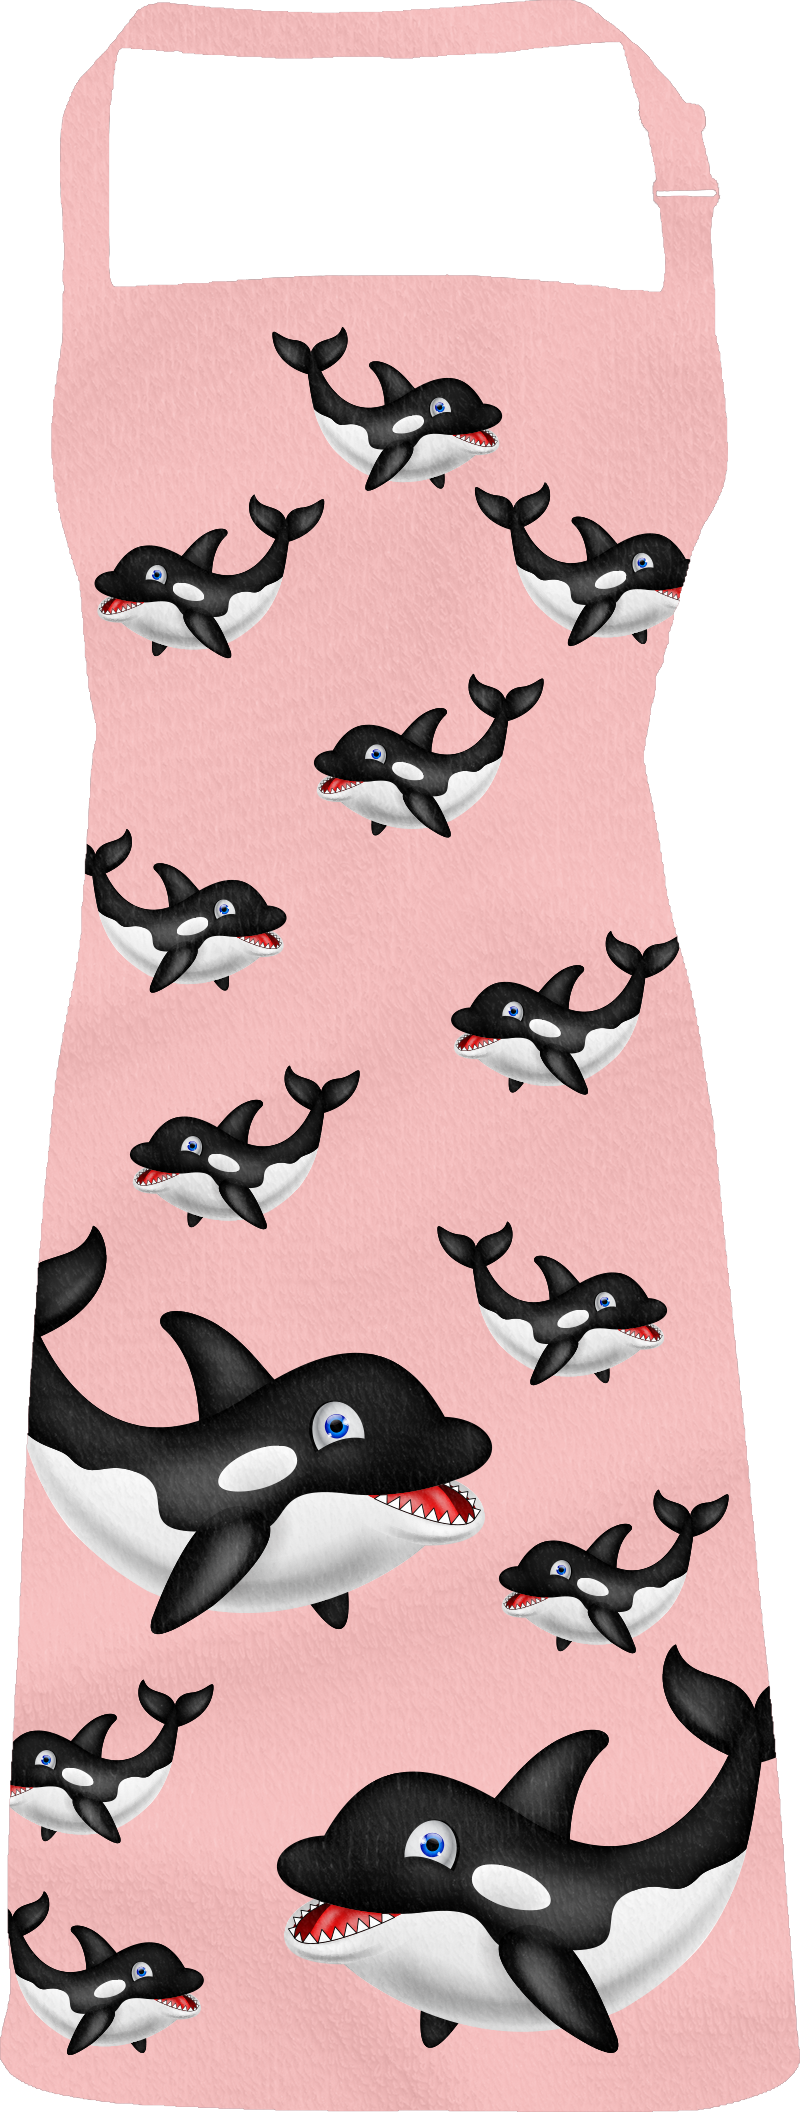 Orca Whale Apron